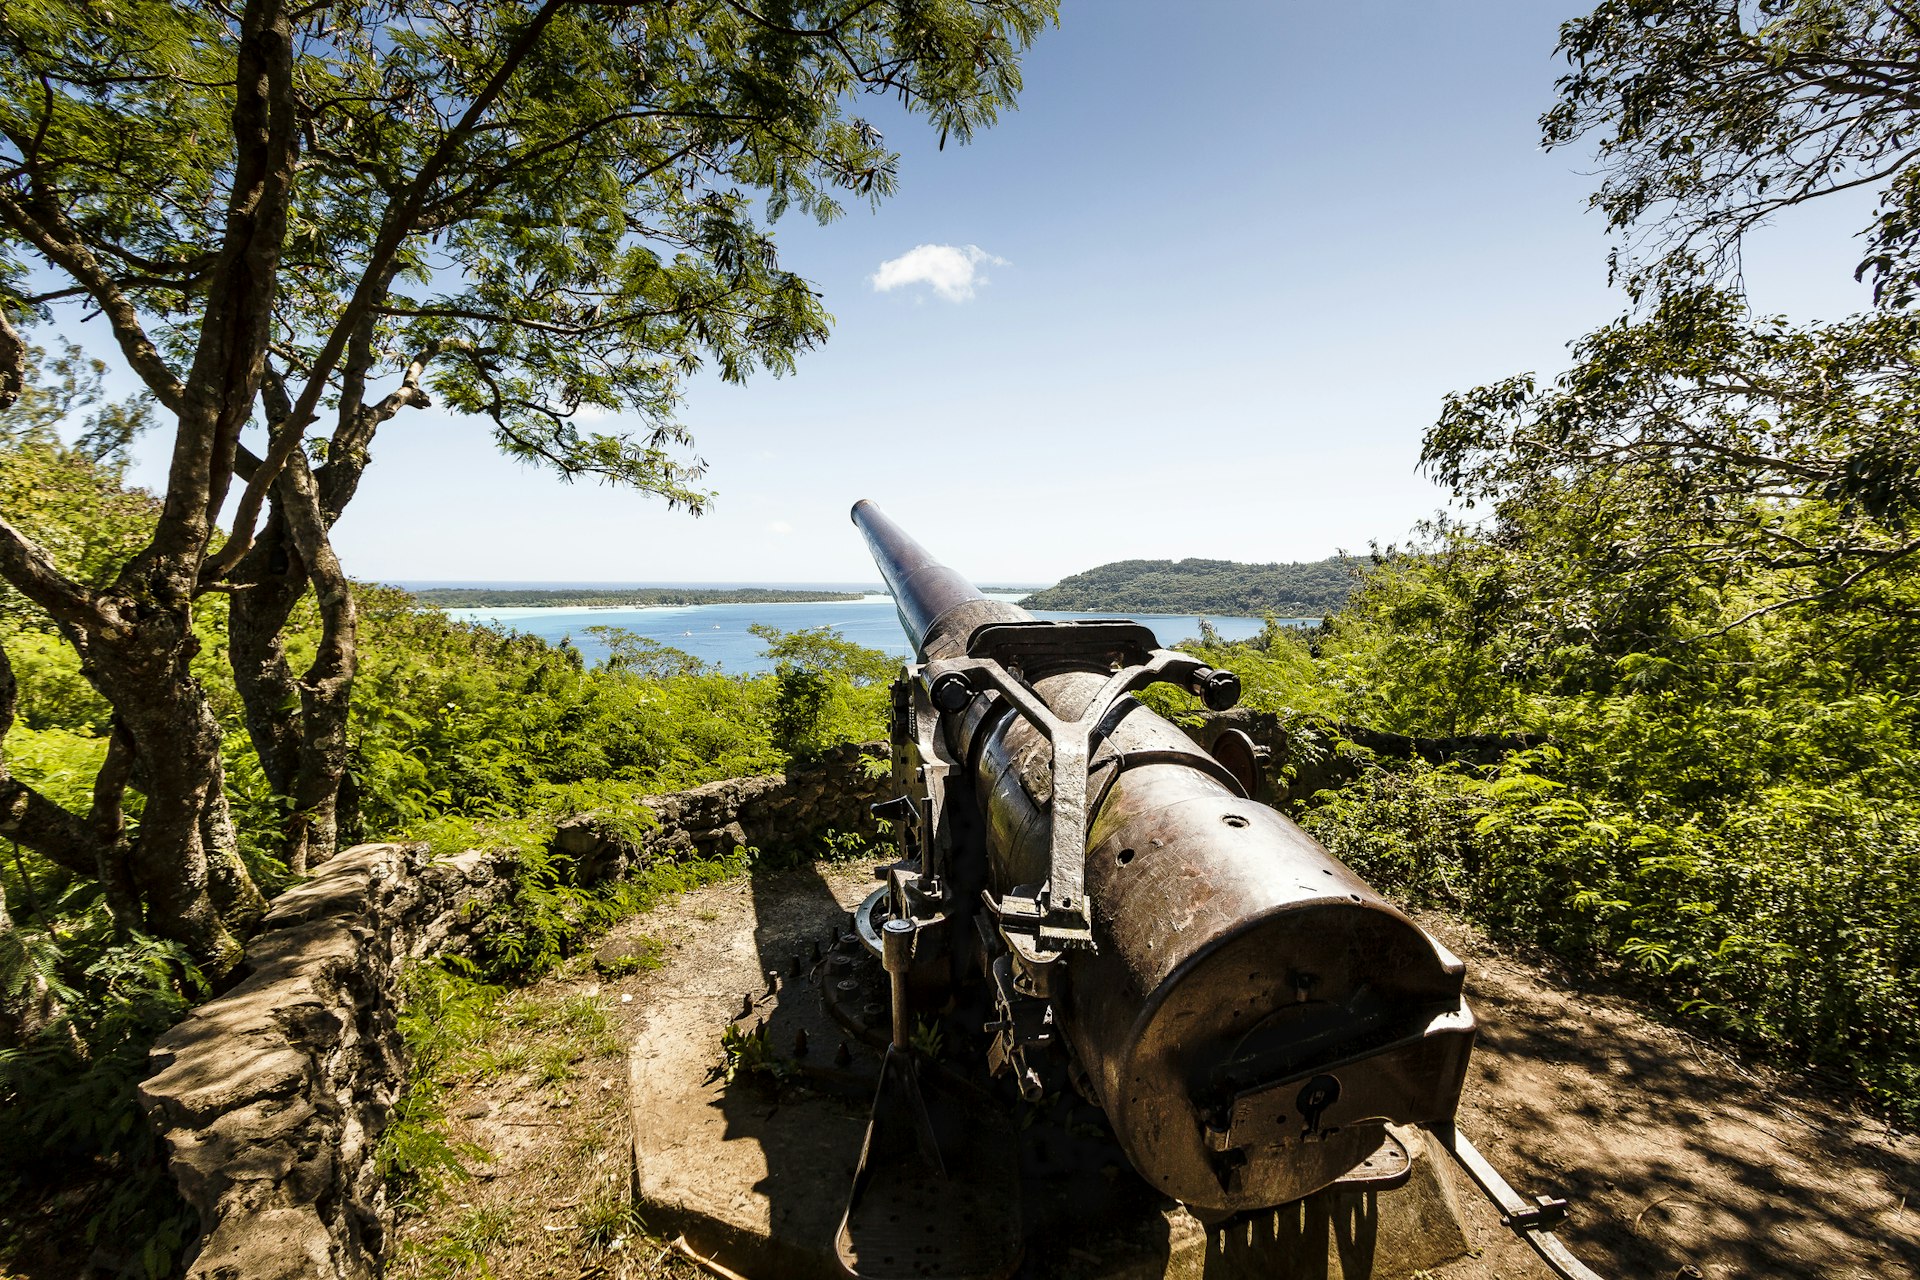 A World War II Cannon on a hilltop overlooking the lagoon in Bora Bora, French Polynesia